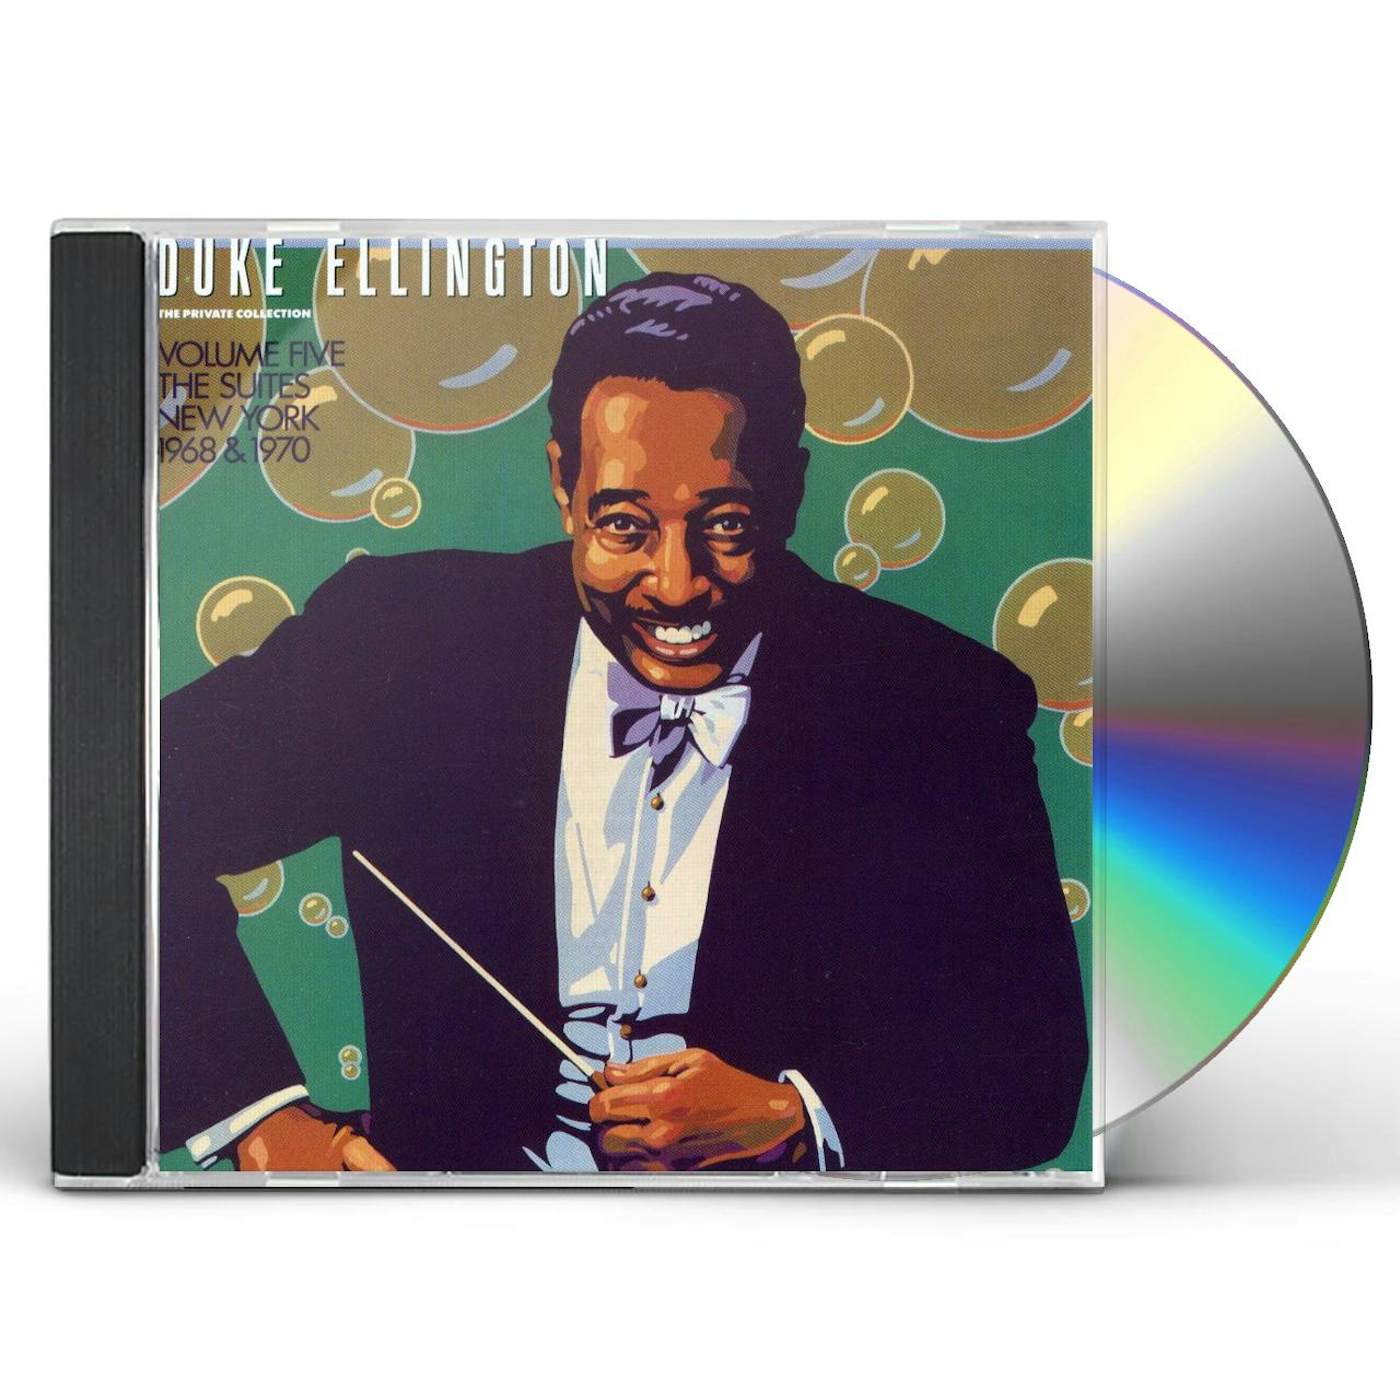 Duke Ellington PRIVATE COLLECTION 5: NEW YORK 1968-70 CD